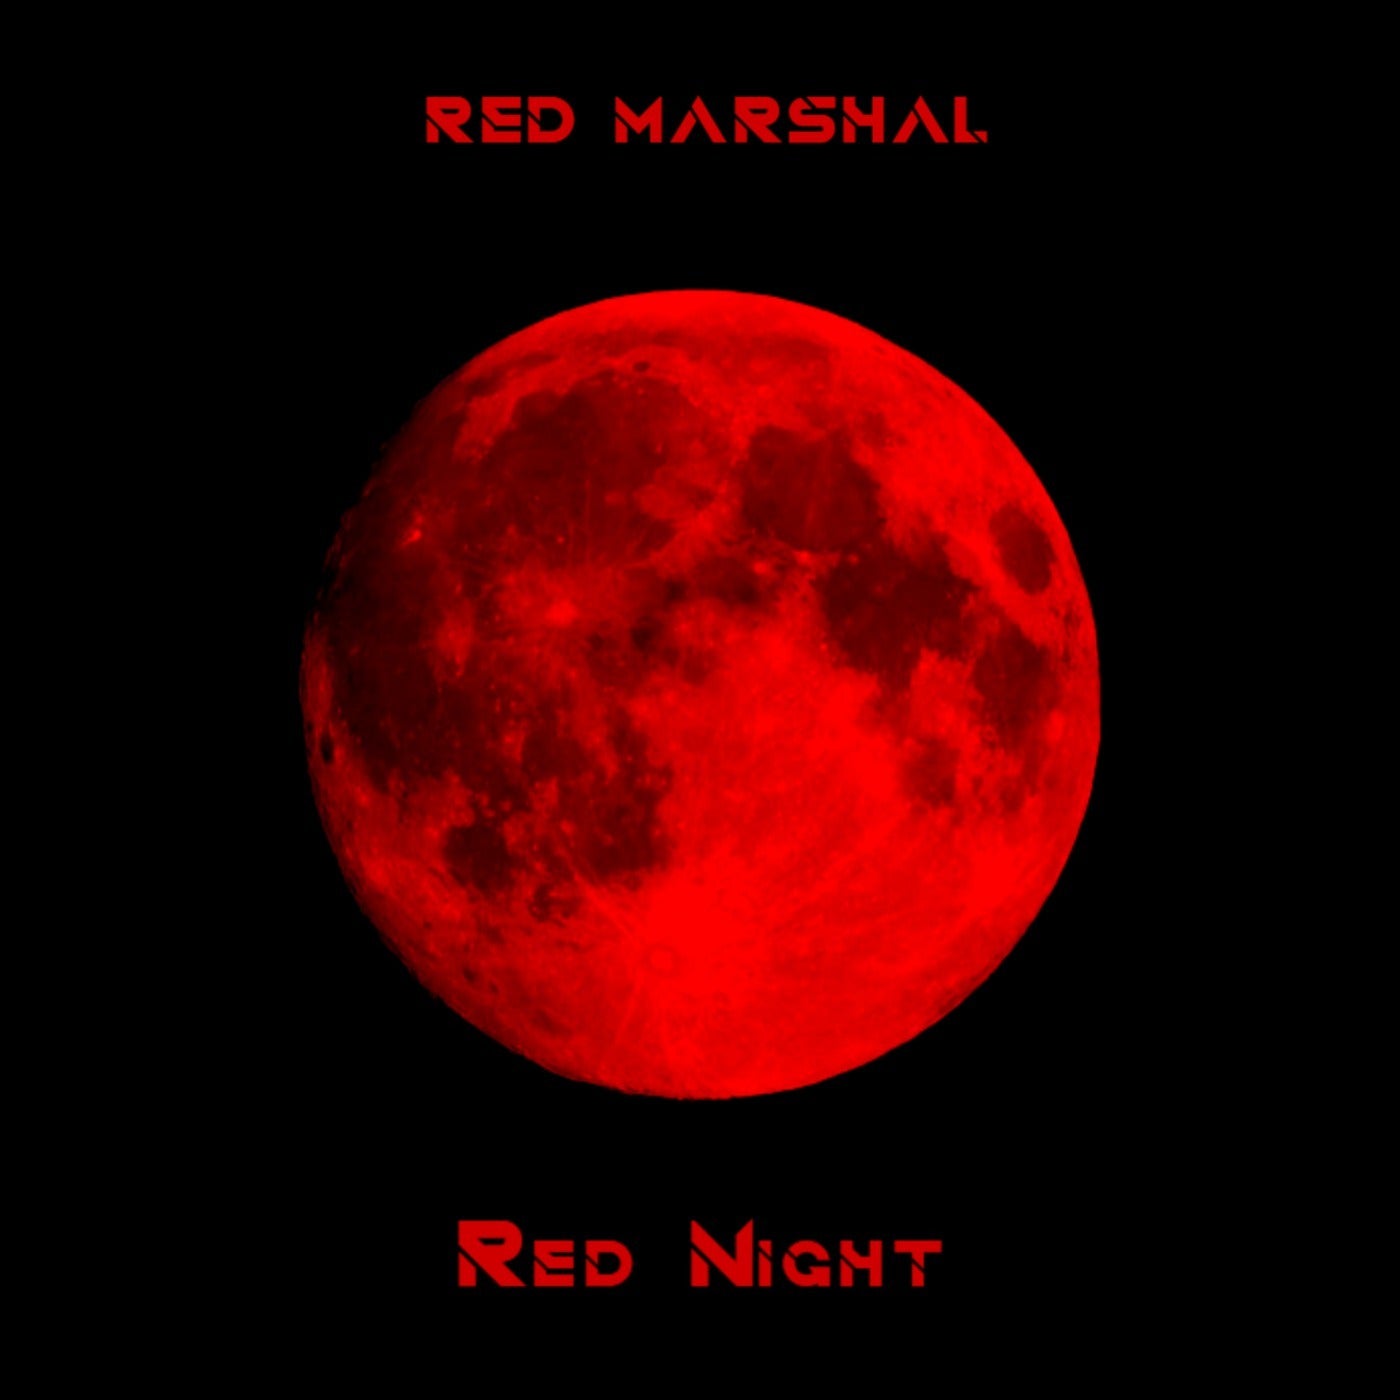 Red Night